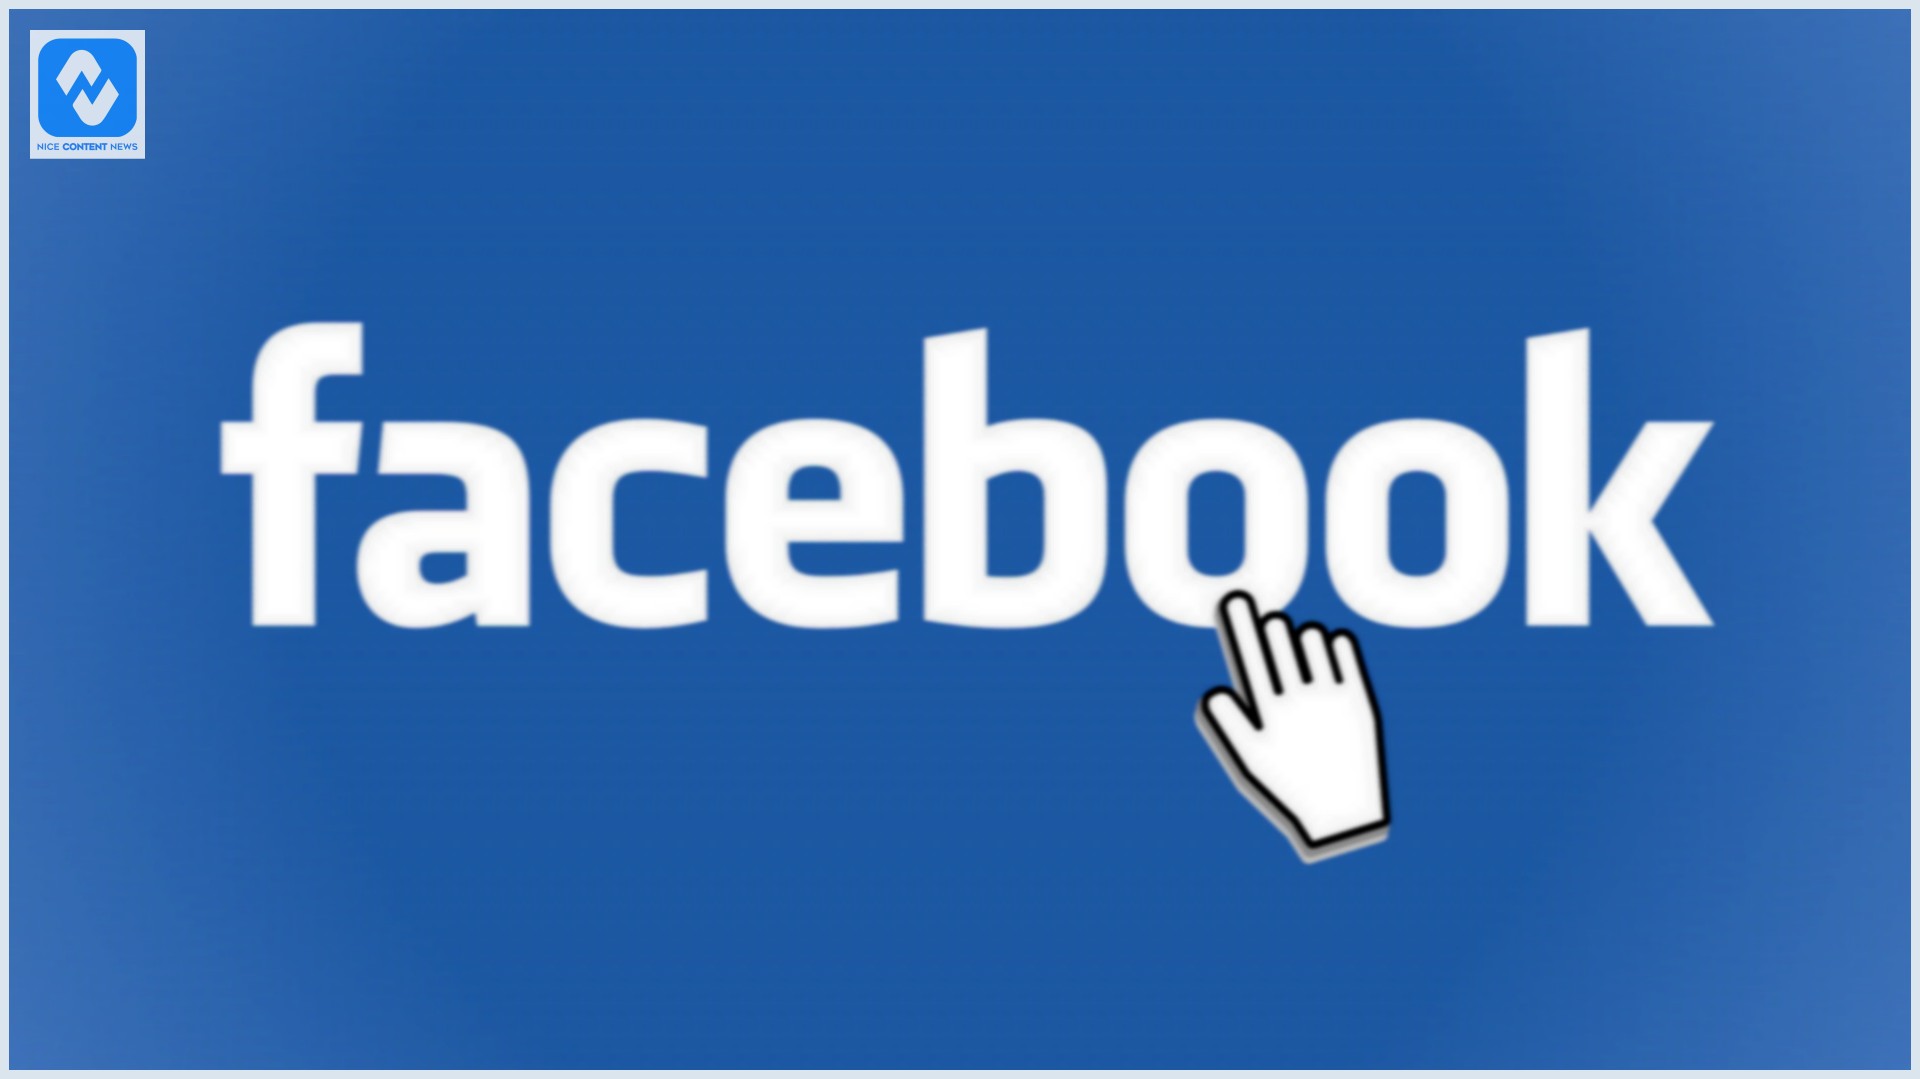 Como anunciar no marketplace no Facebook?